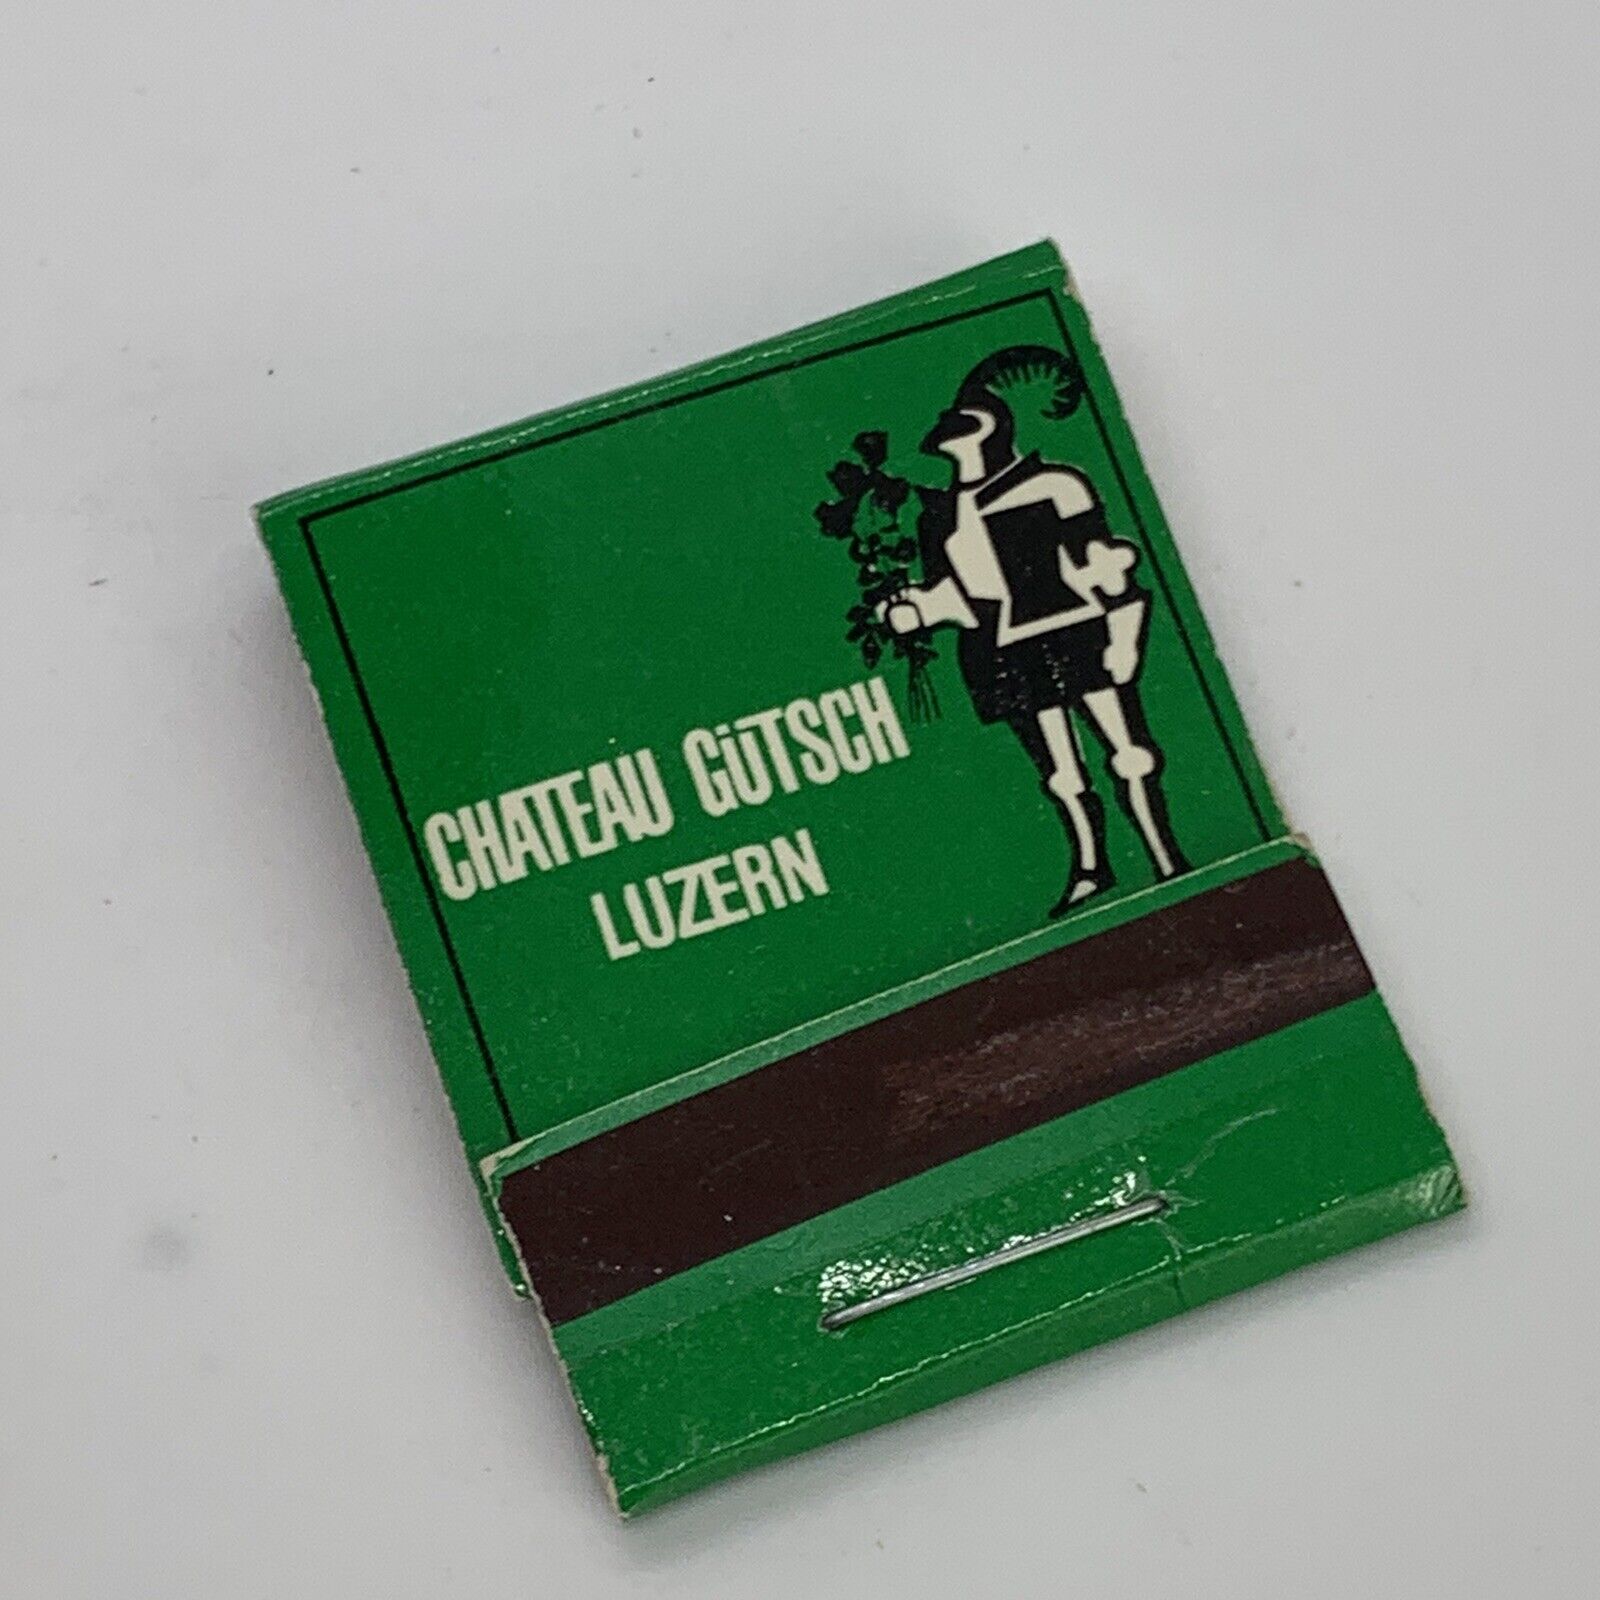 Vintage Château Gutsch Luzern Matchbook Cover